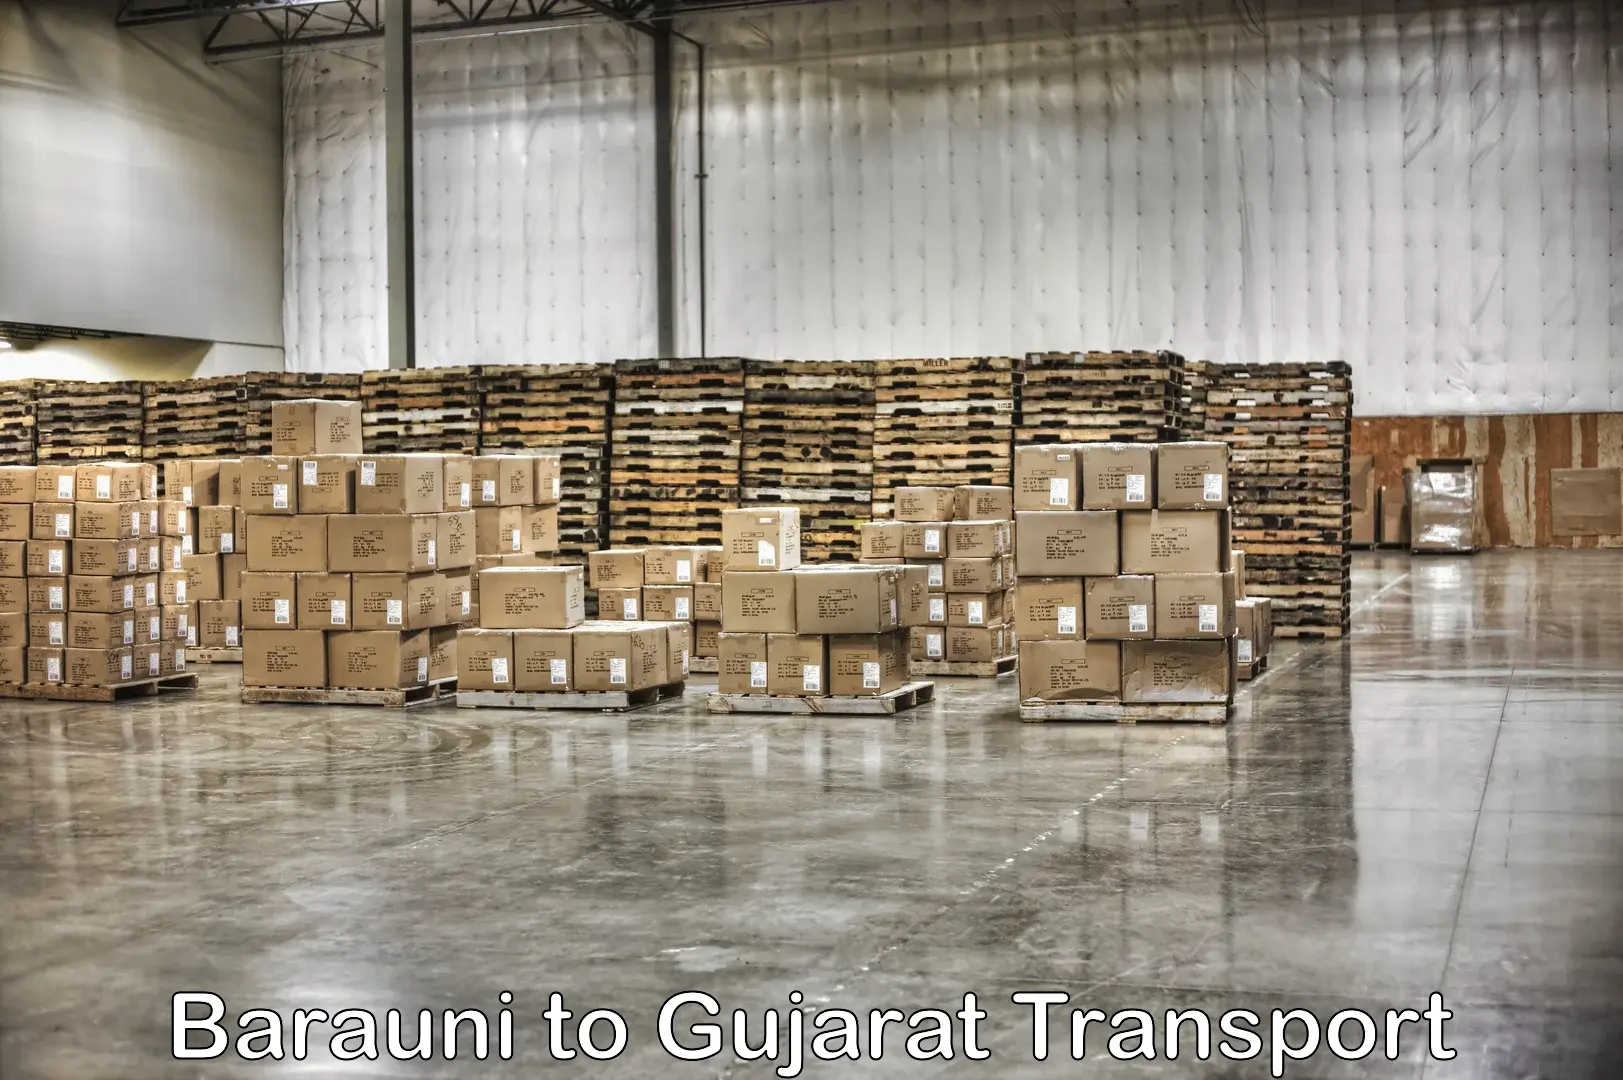 Truck transport companies in India Barauni to Gandhinagar